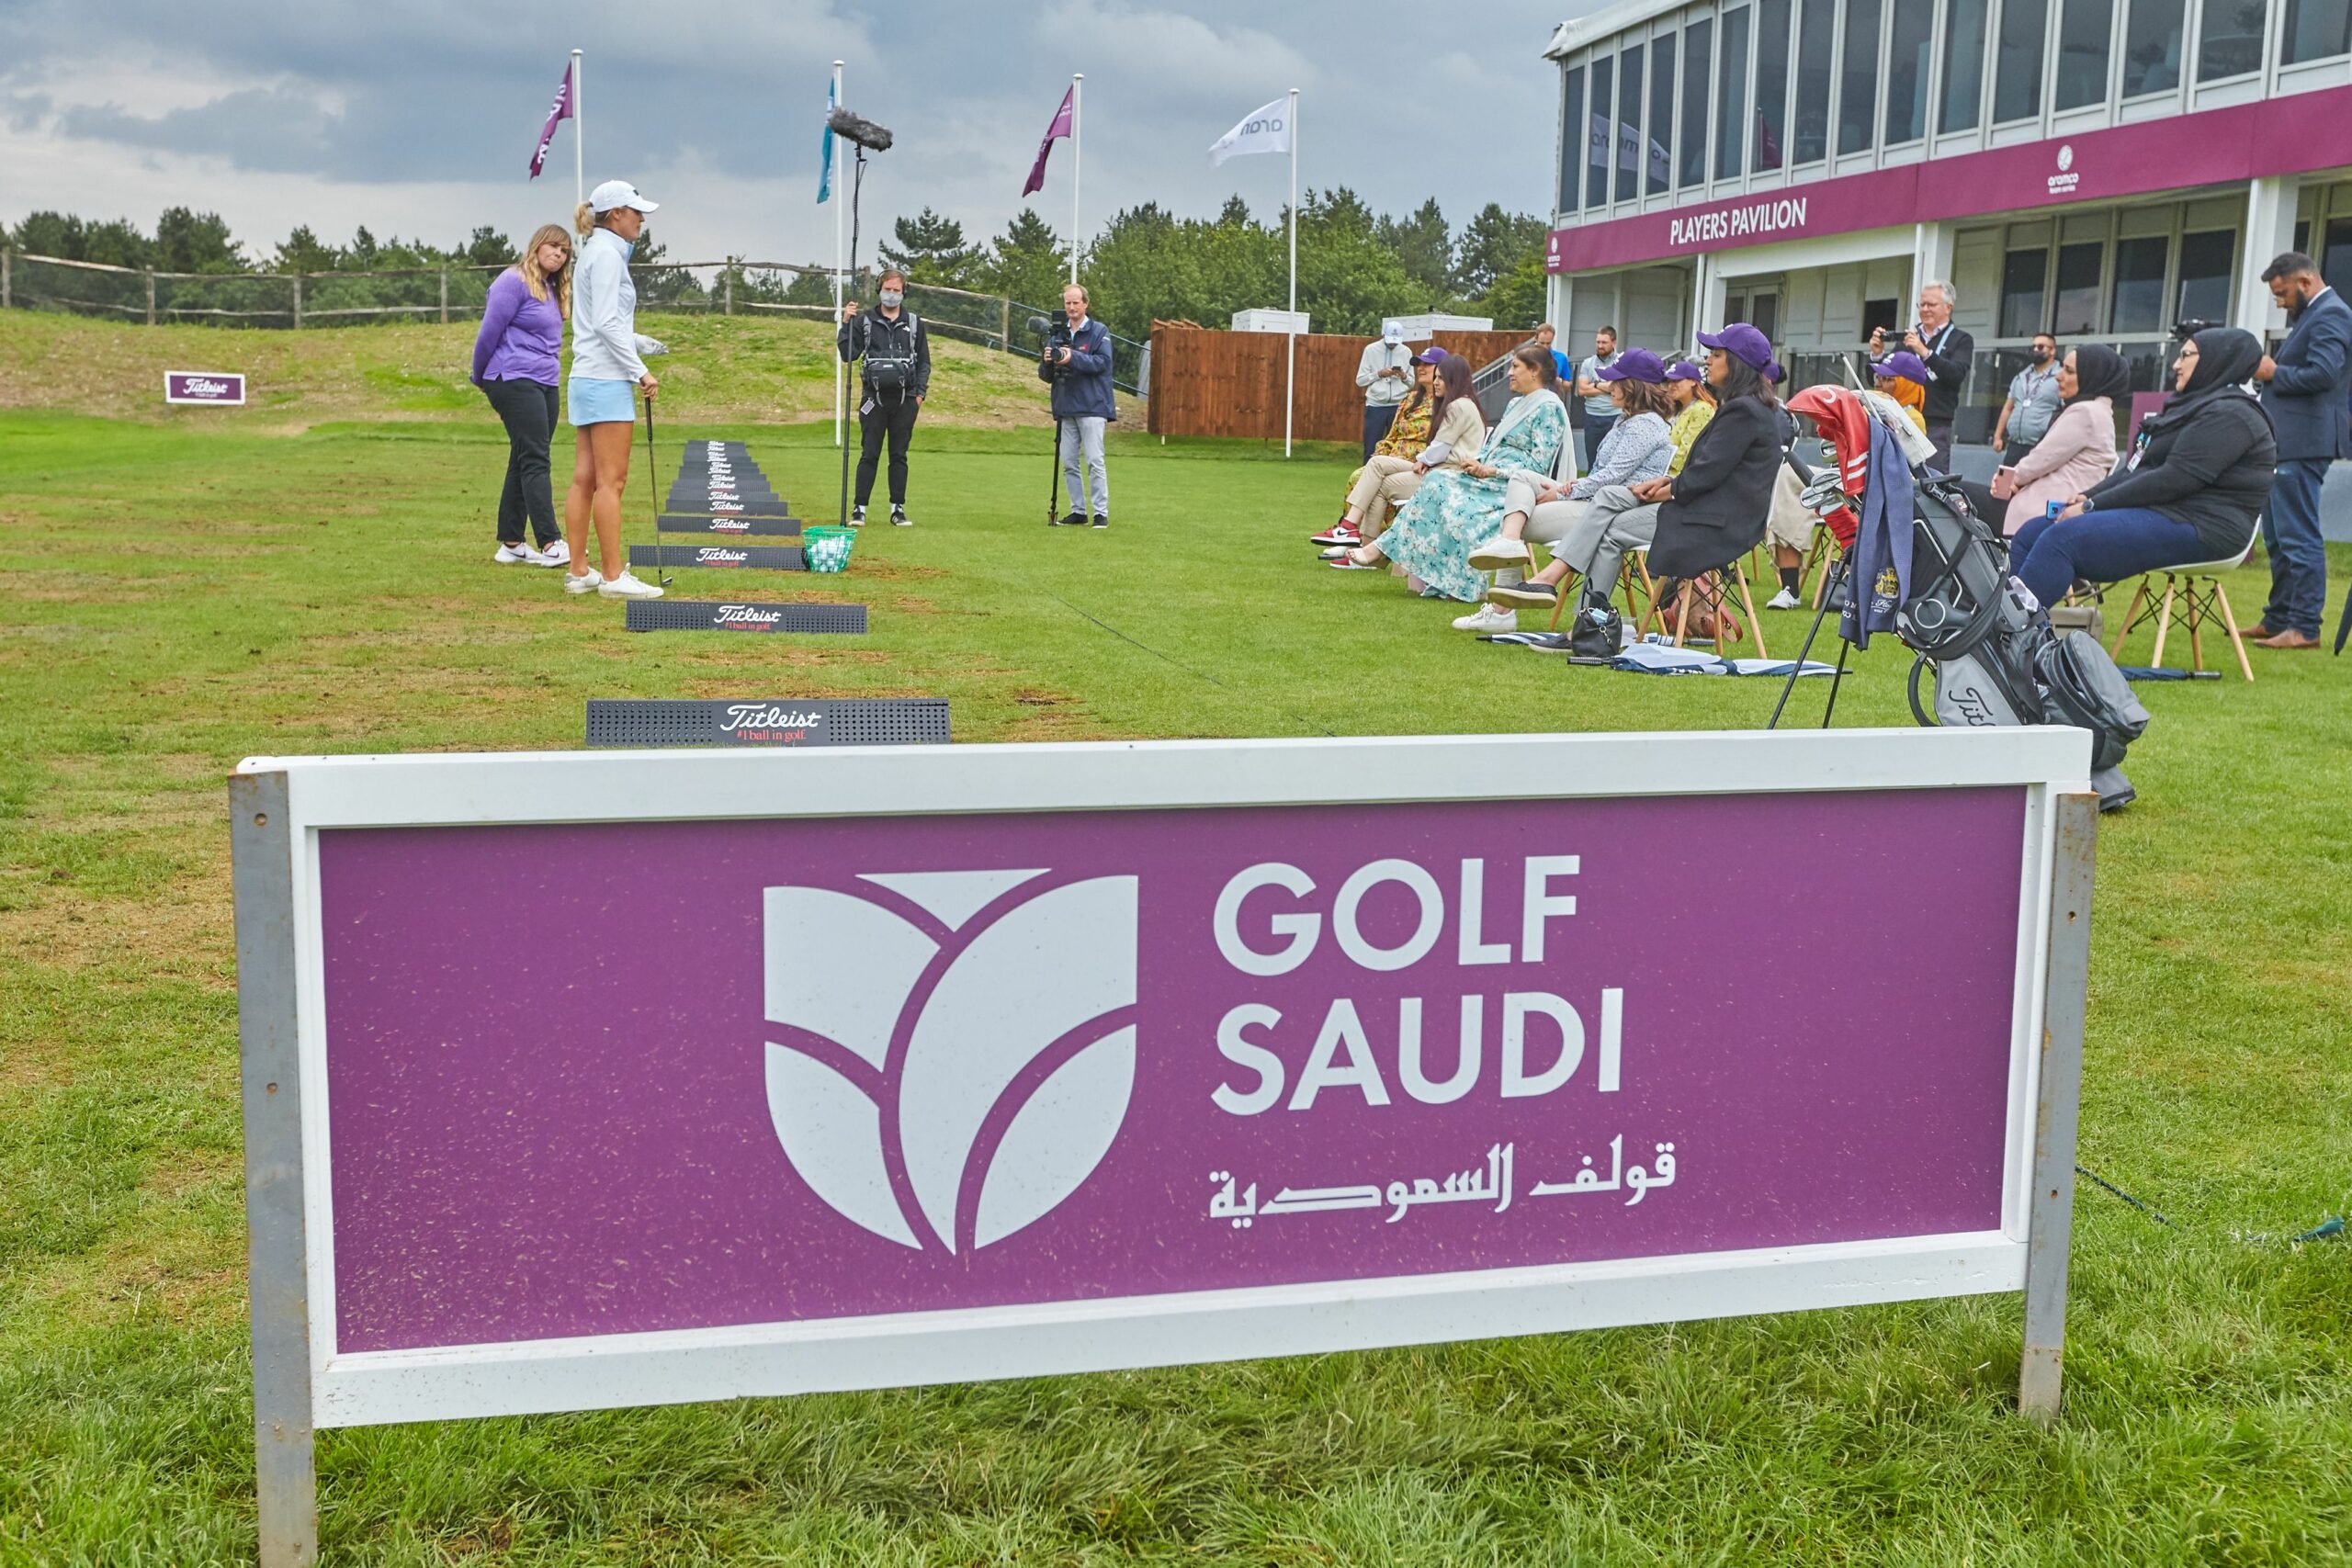 Golf Saudi Hosts Clinic At Centurion Club Near London